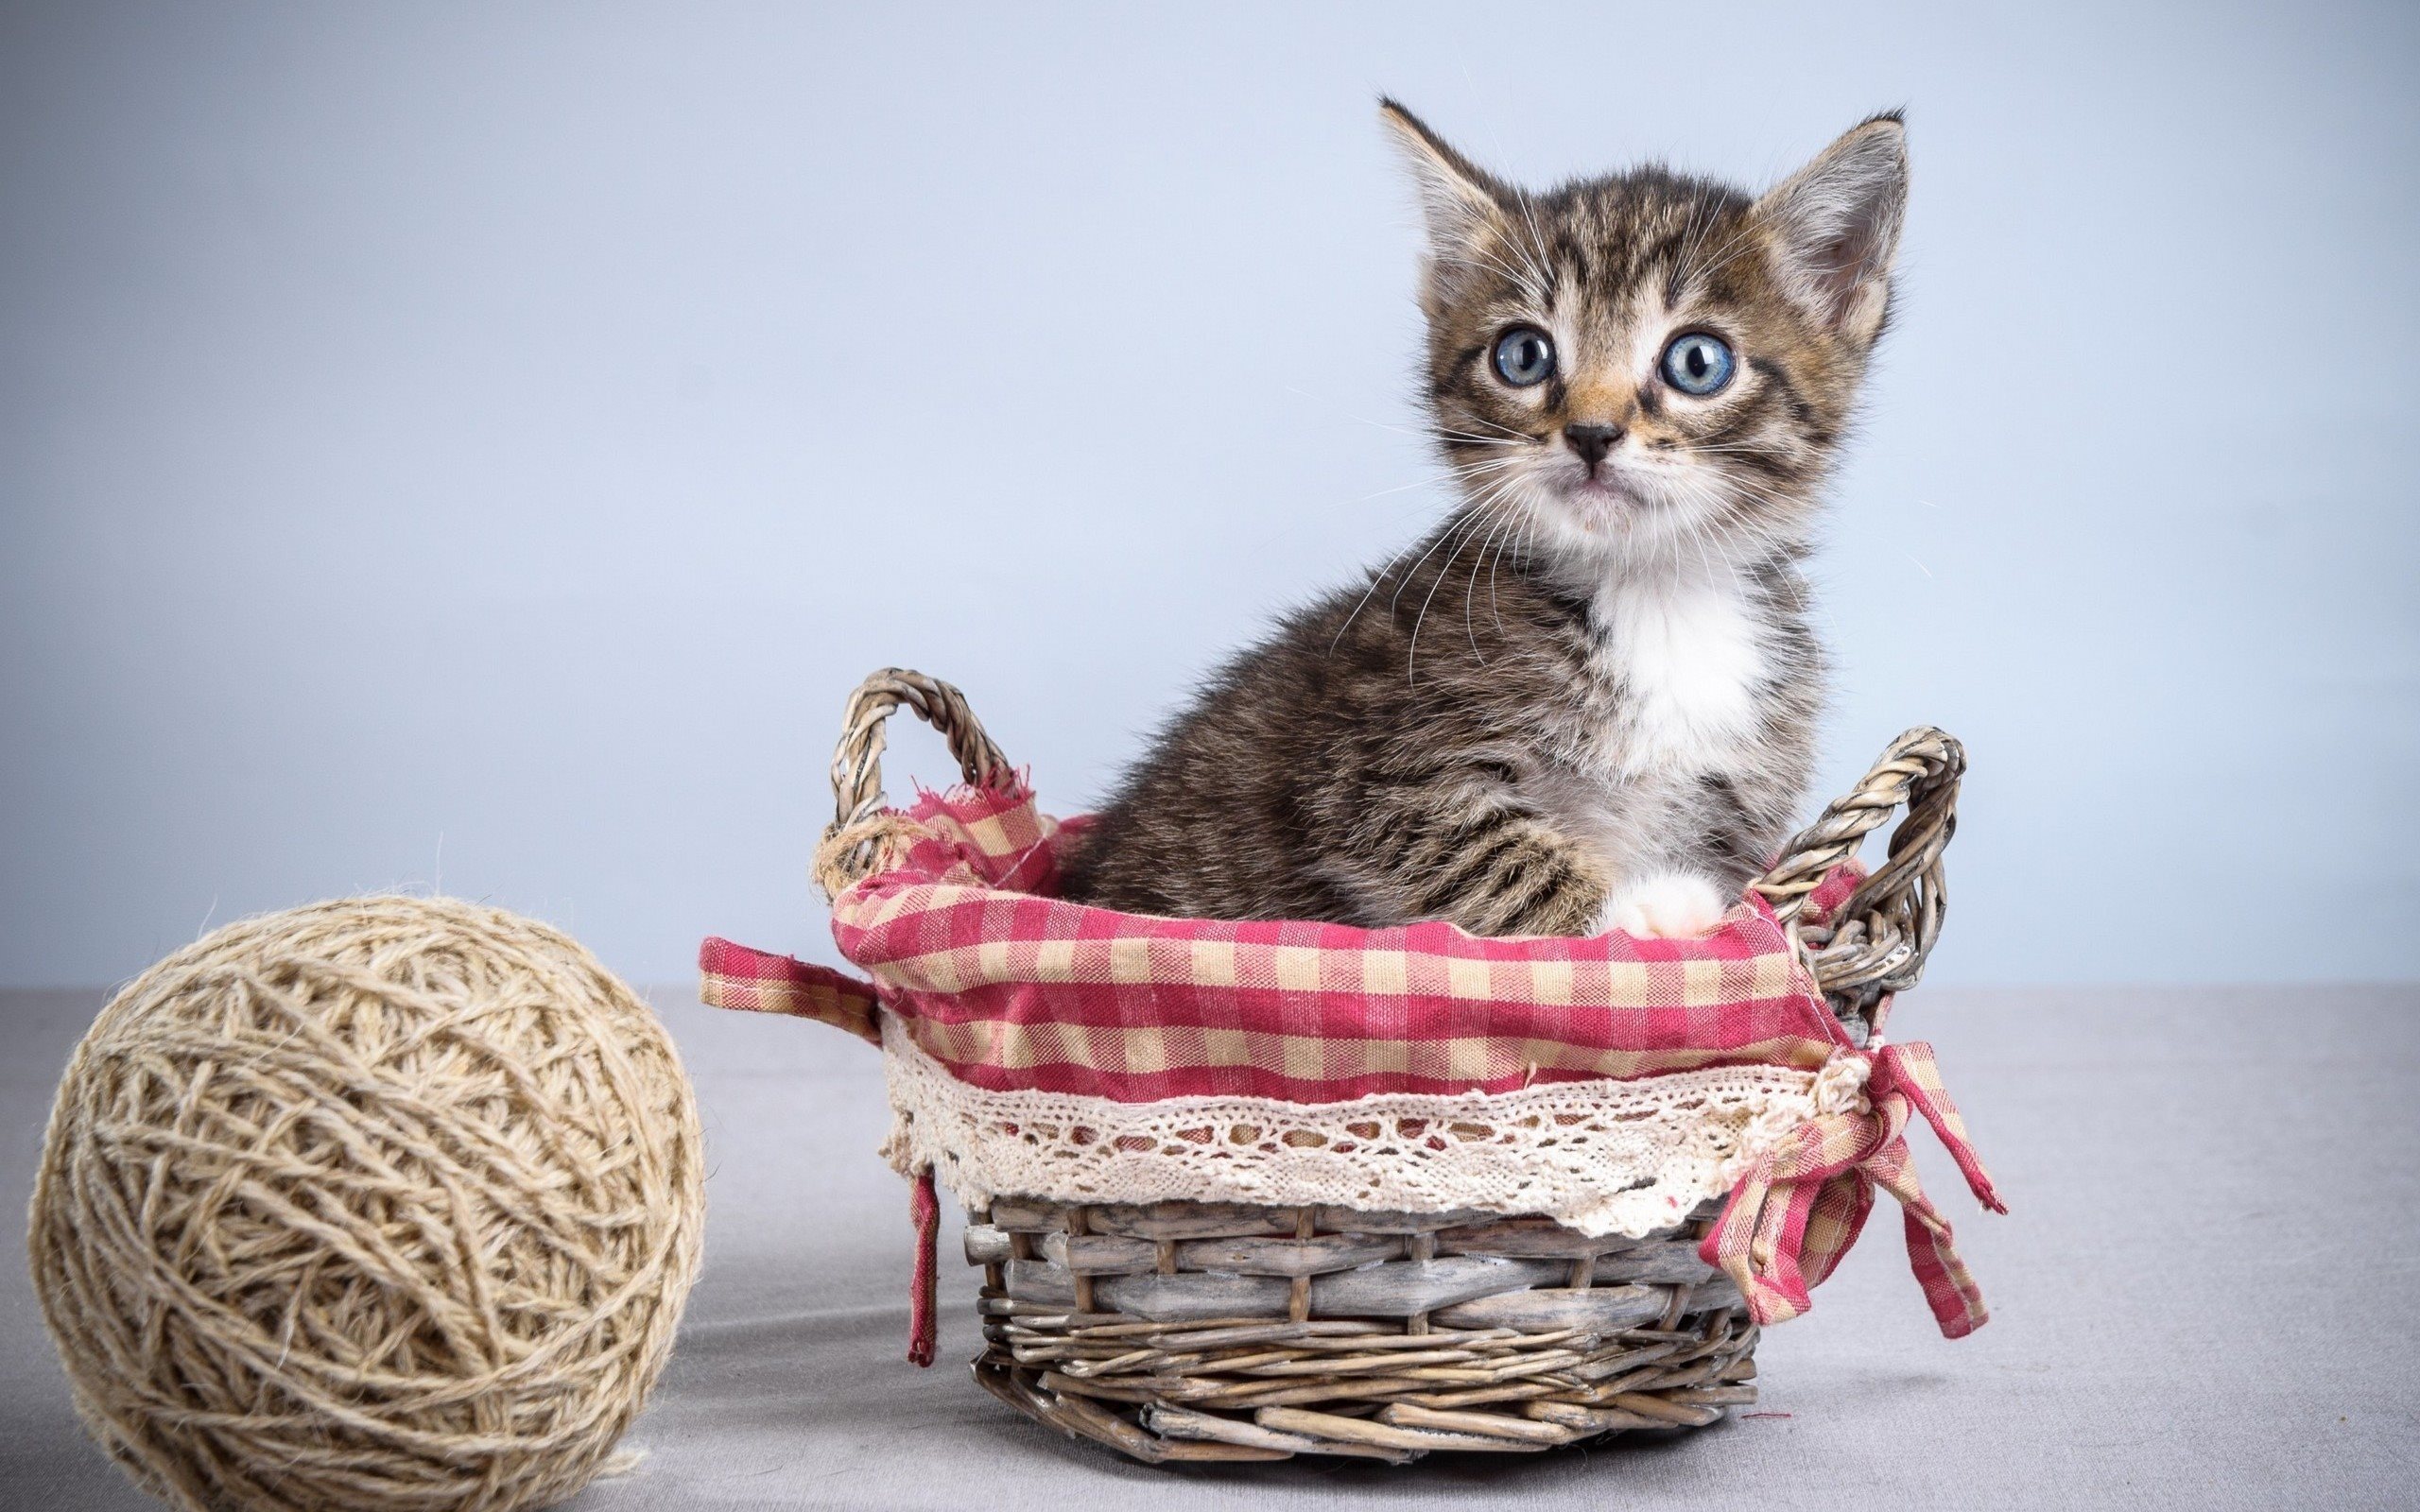 Download wallpapers basket, kitten, little cat for desktop with ...